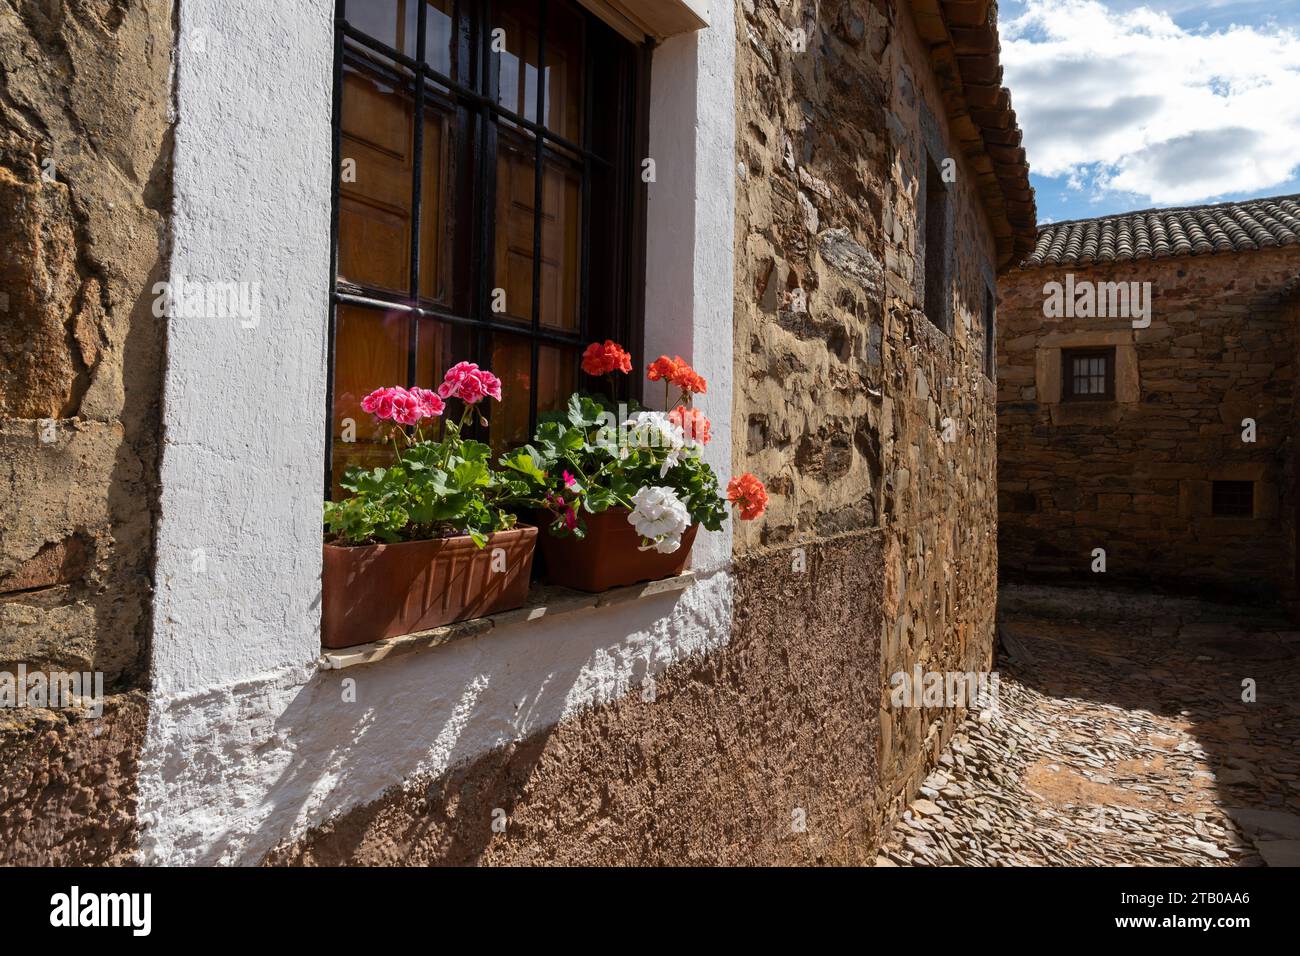 Colorful geraniums adorn a window on Calle de las Chinchillas in the Maragato village of Castrillo de los Polvazares along the Camino Frances in Leon, Stock Photo